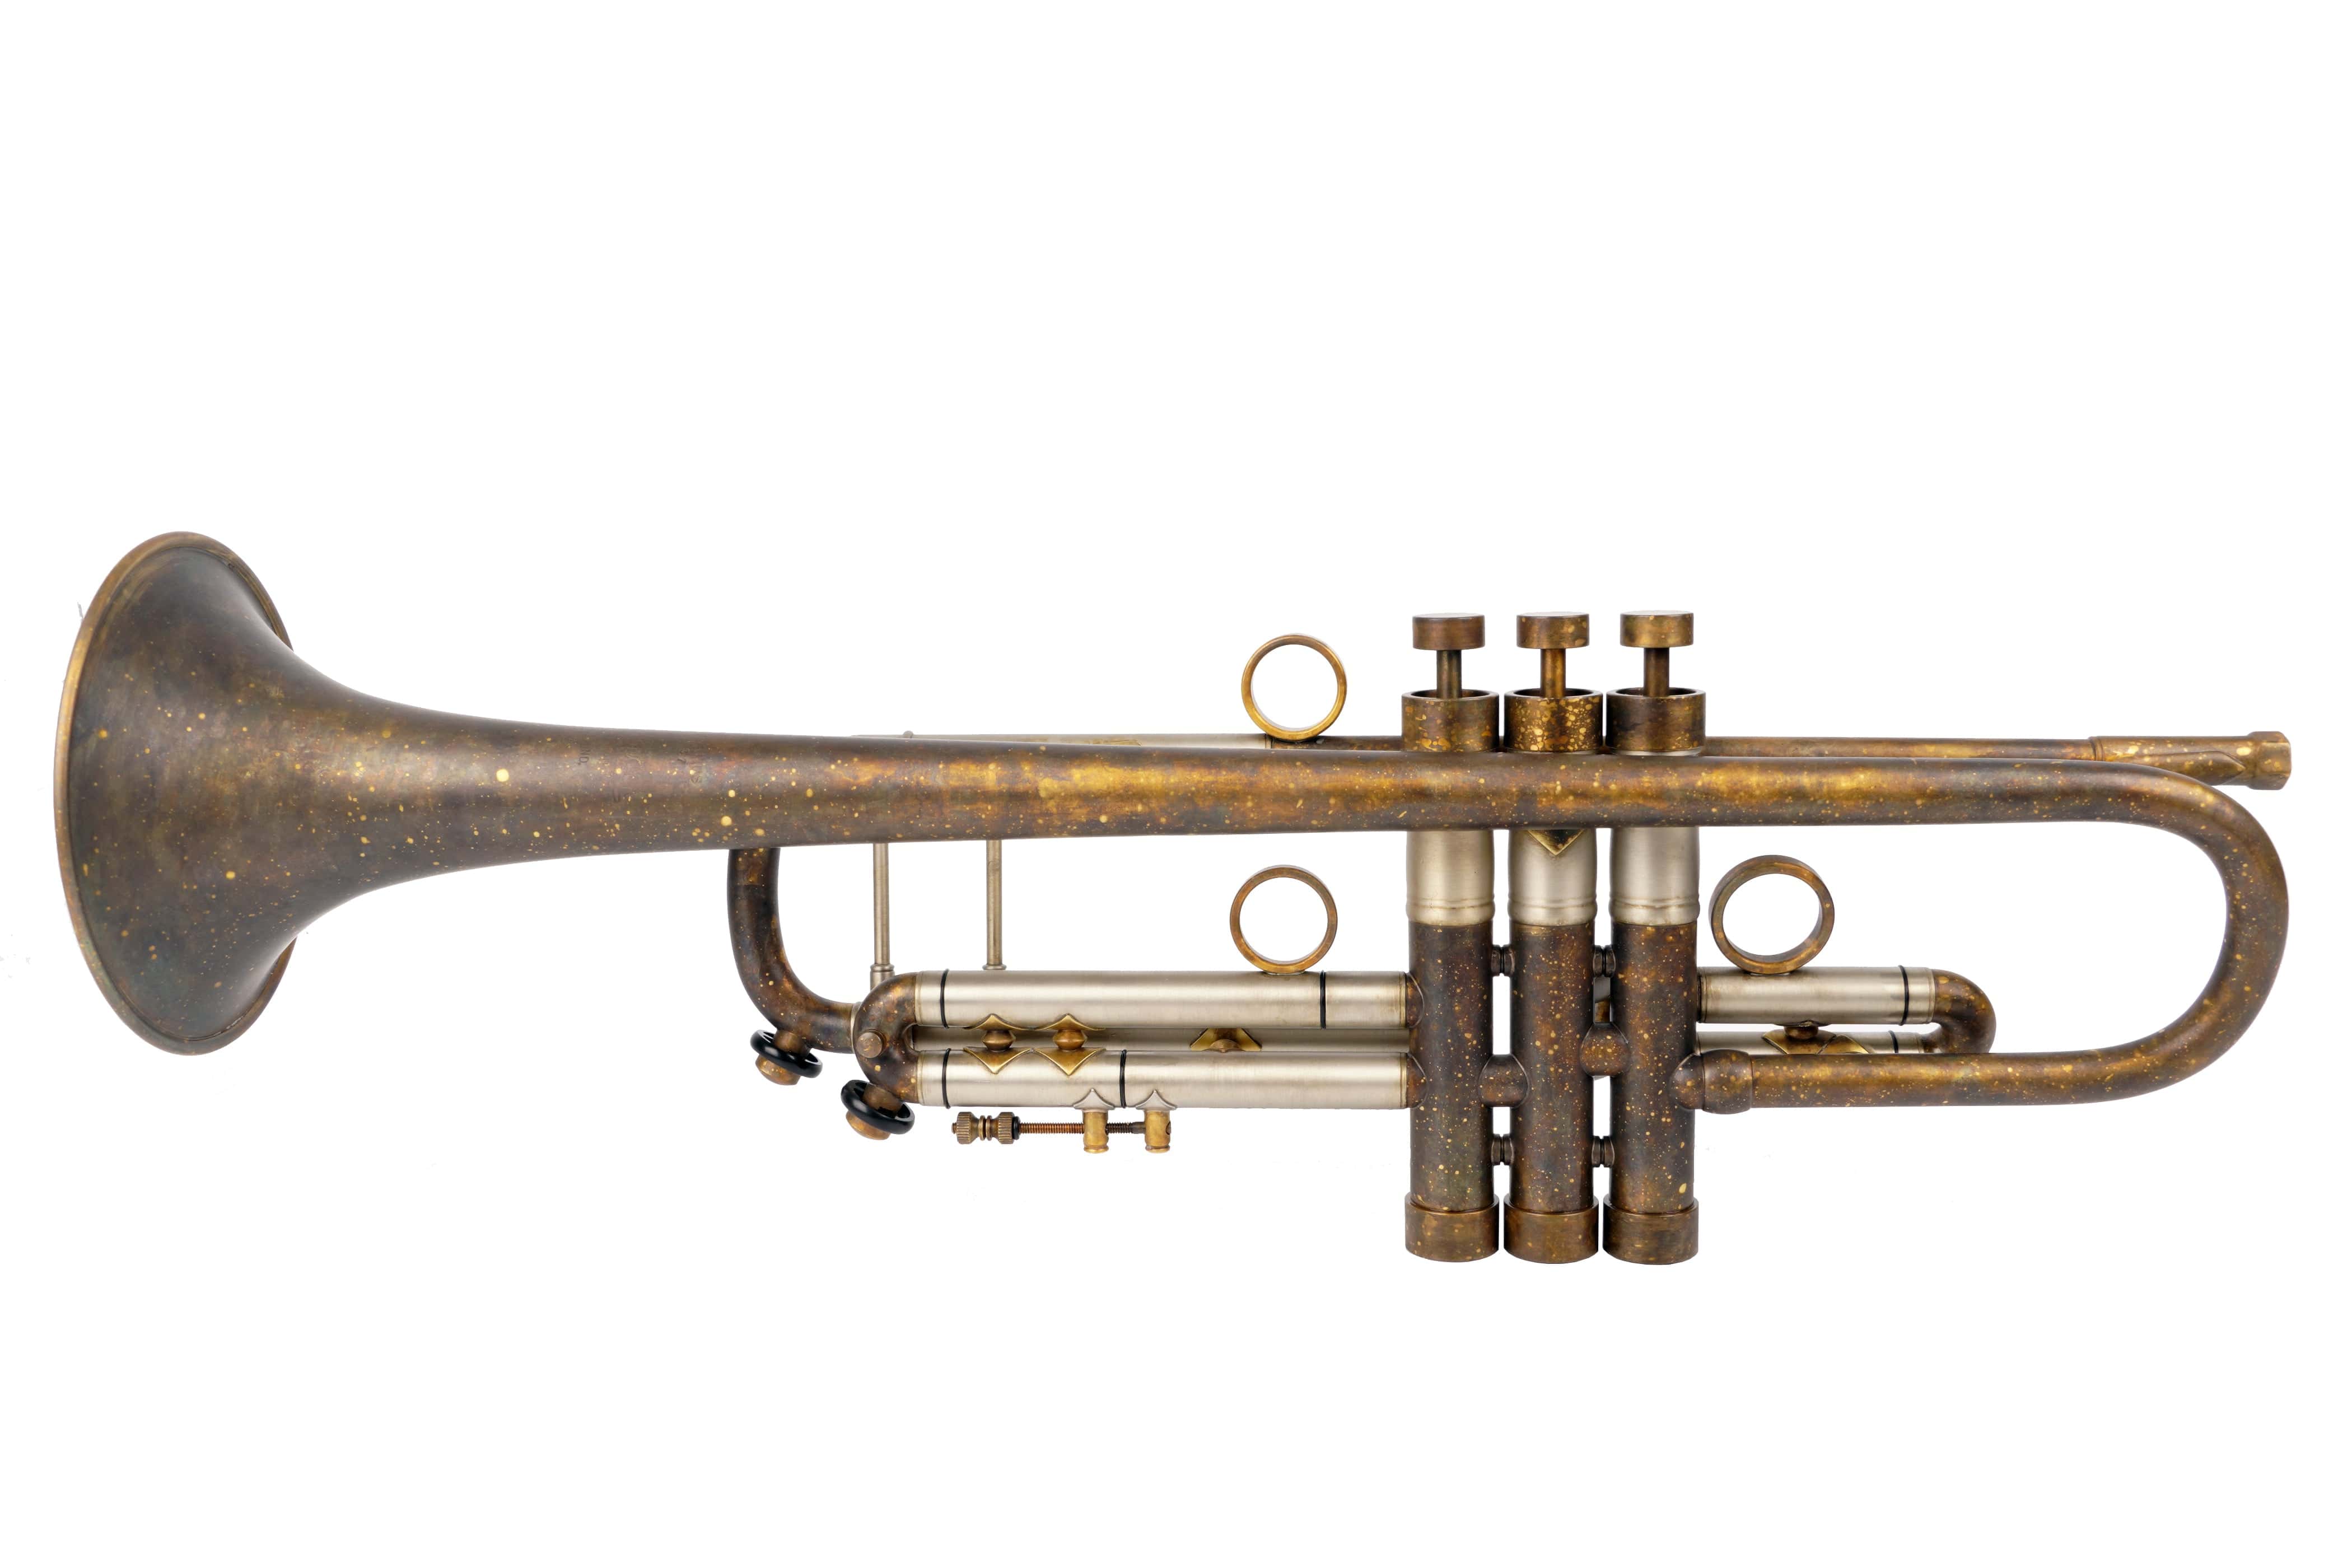 GREEN Bach Stradivarius 37 trumpet customized by KGUmusic